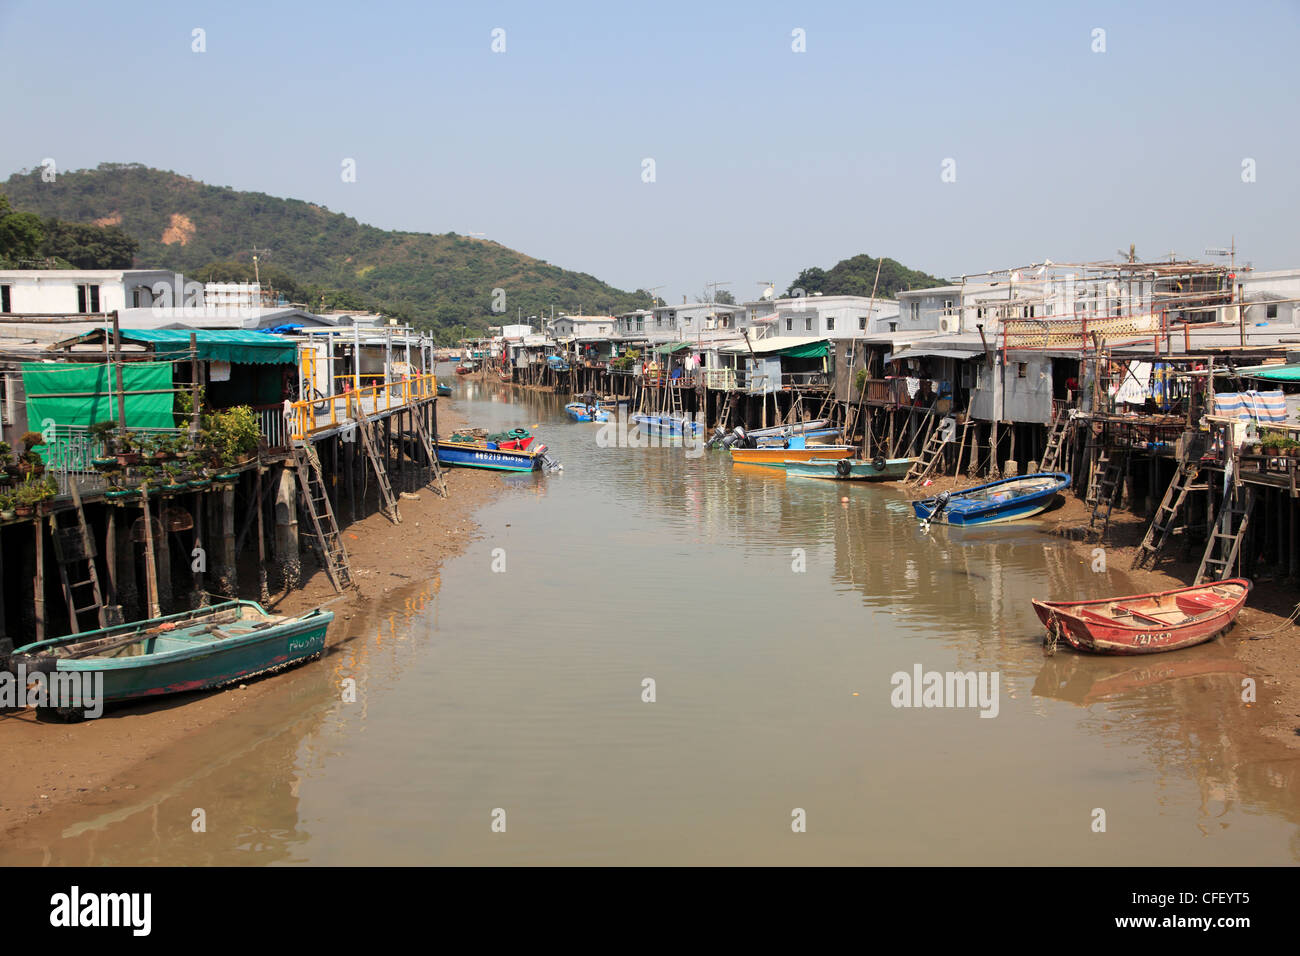 Palafitte, Tai O villaggio di pescatori, l'Isola di Lantau, Hong Kong, Cina, Asia Foto Stock